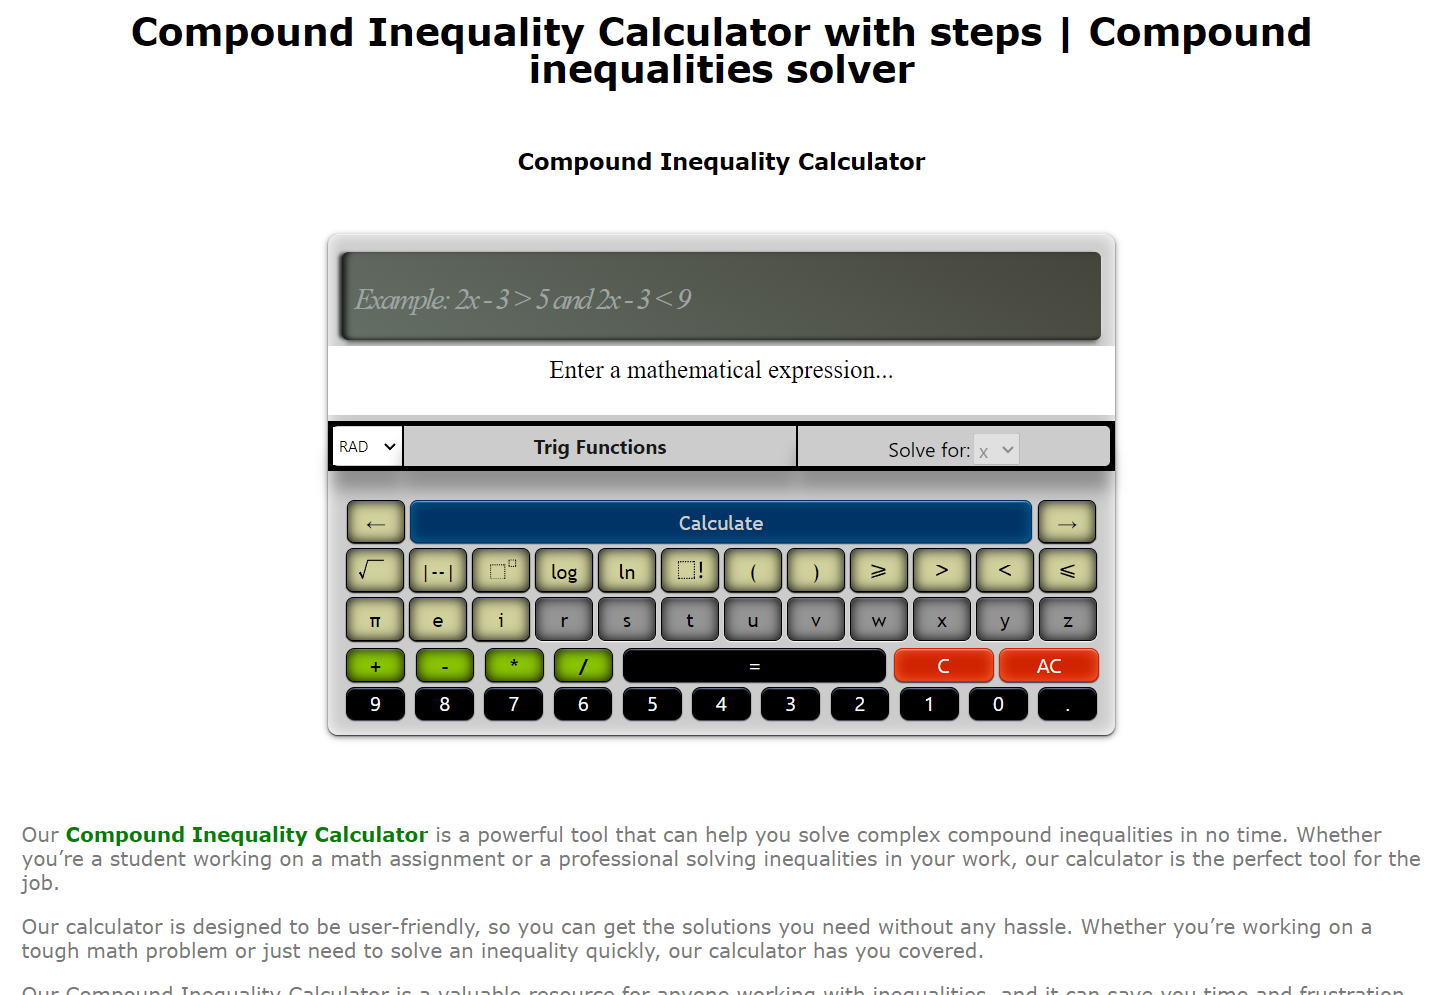 Compound inequalities solver